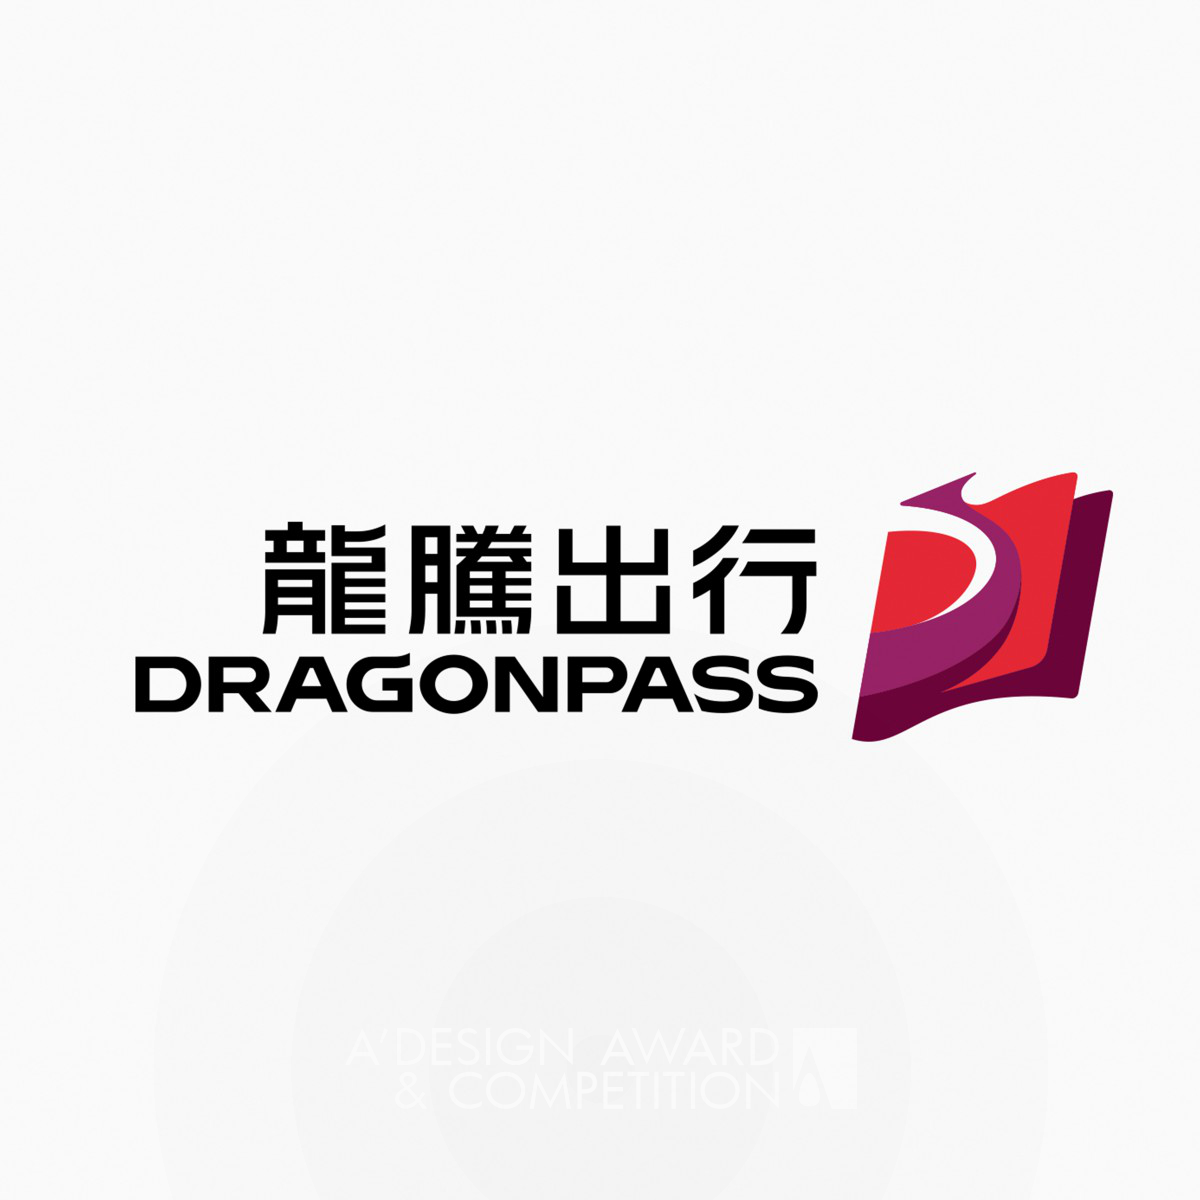 Dragonpass Brand Identity by Mtc Brand Consultancy